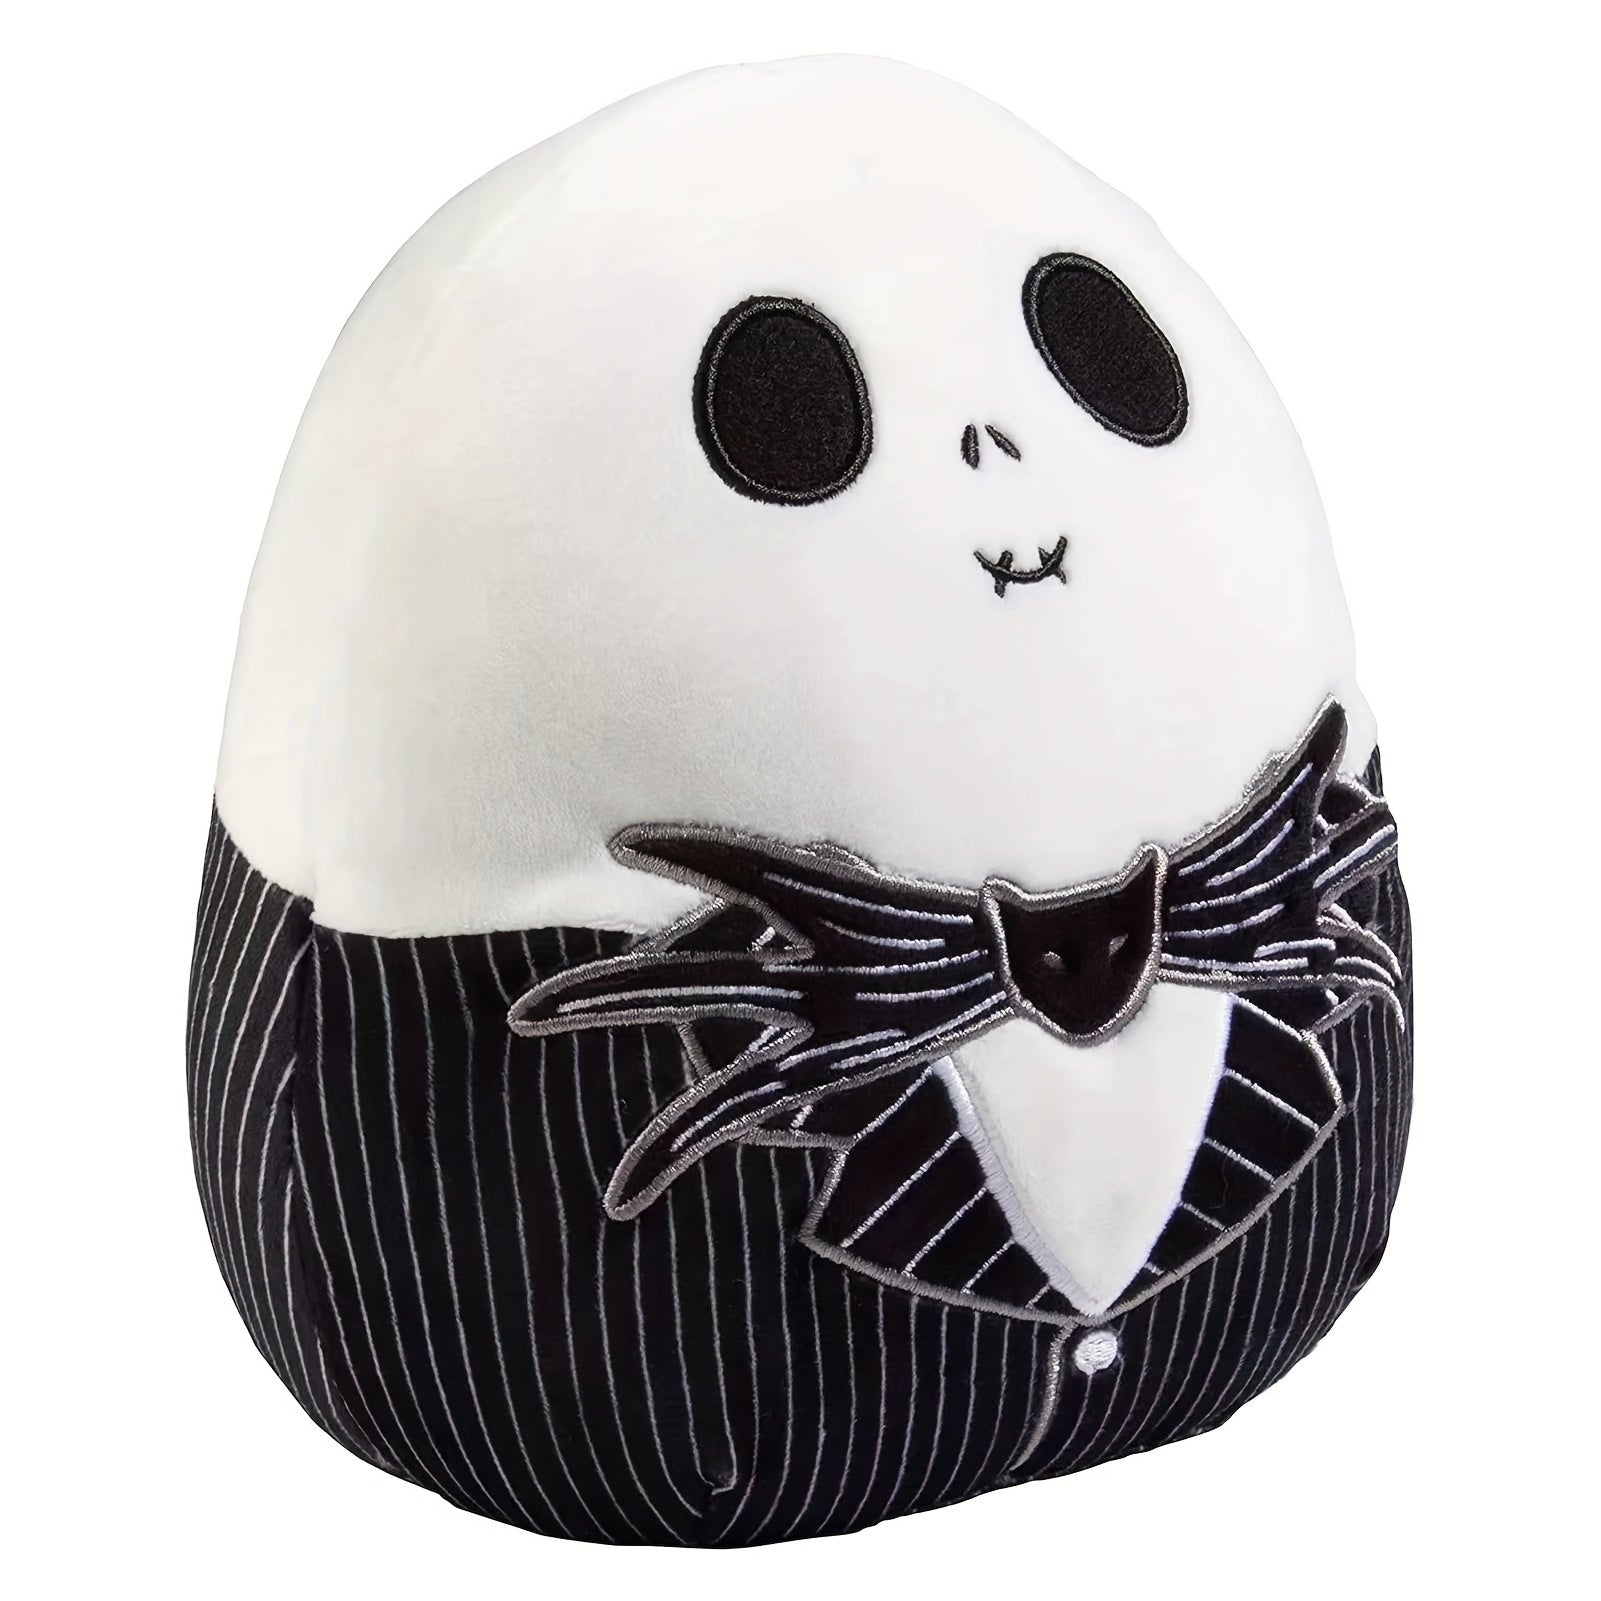 Cuddly Jack Plush-Soft Stuffed Animal Toy - Perfect Gift For Kids On Birthdays & Halloween! Cykapu